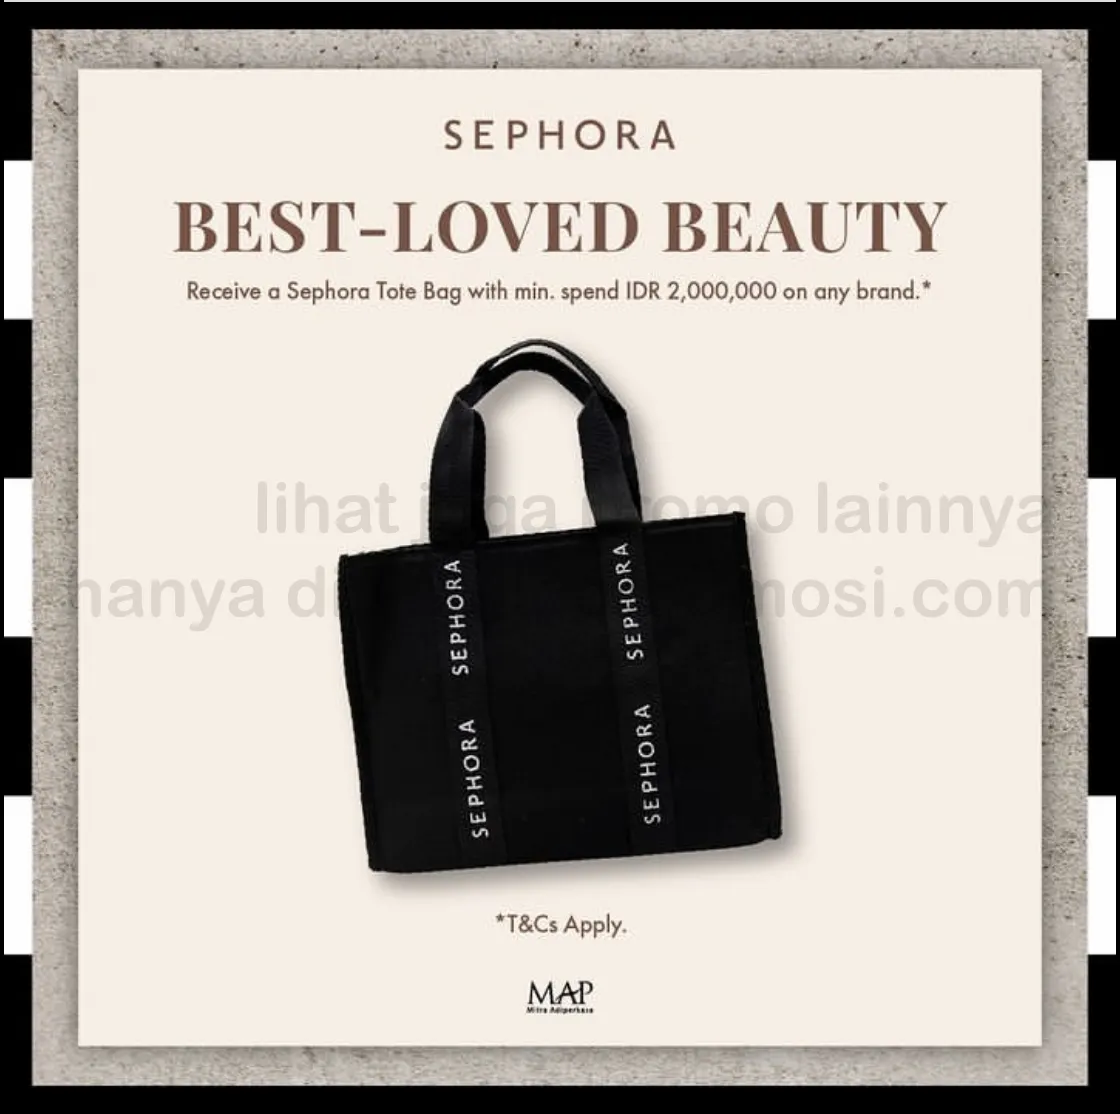 Promo Sephora Best-Loved Beauty - GRATIS Exclusive Sephora Tote Bag*